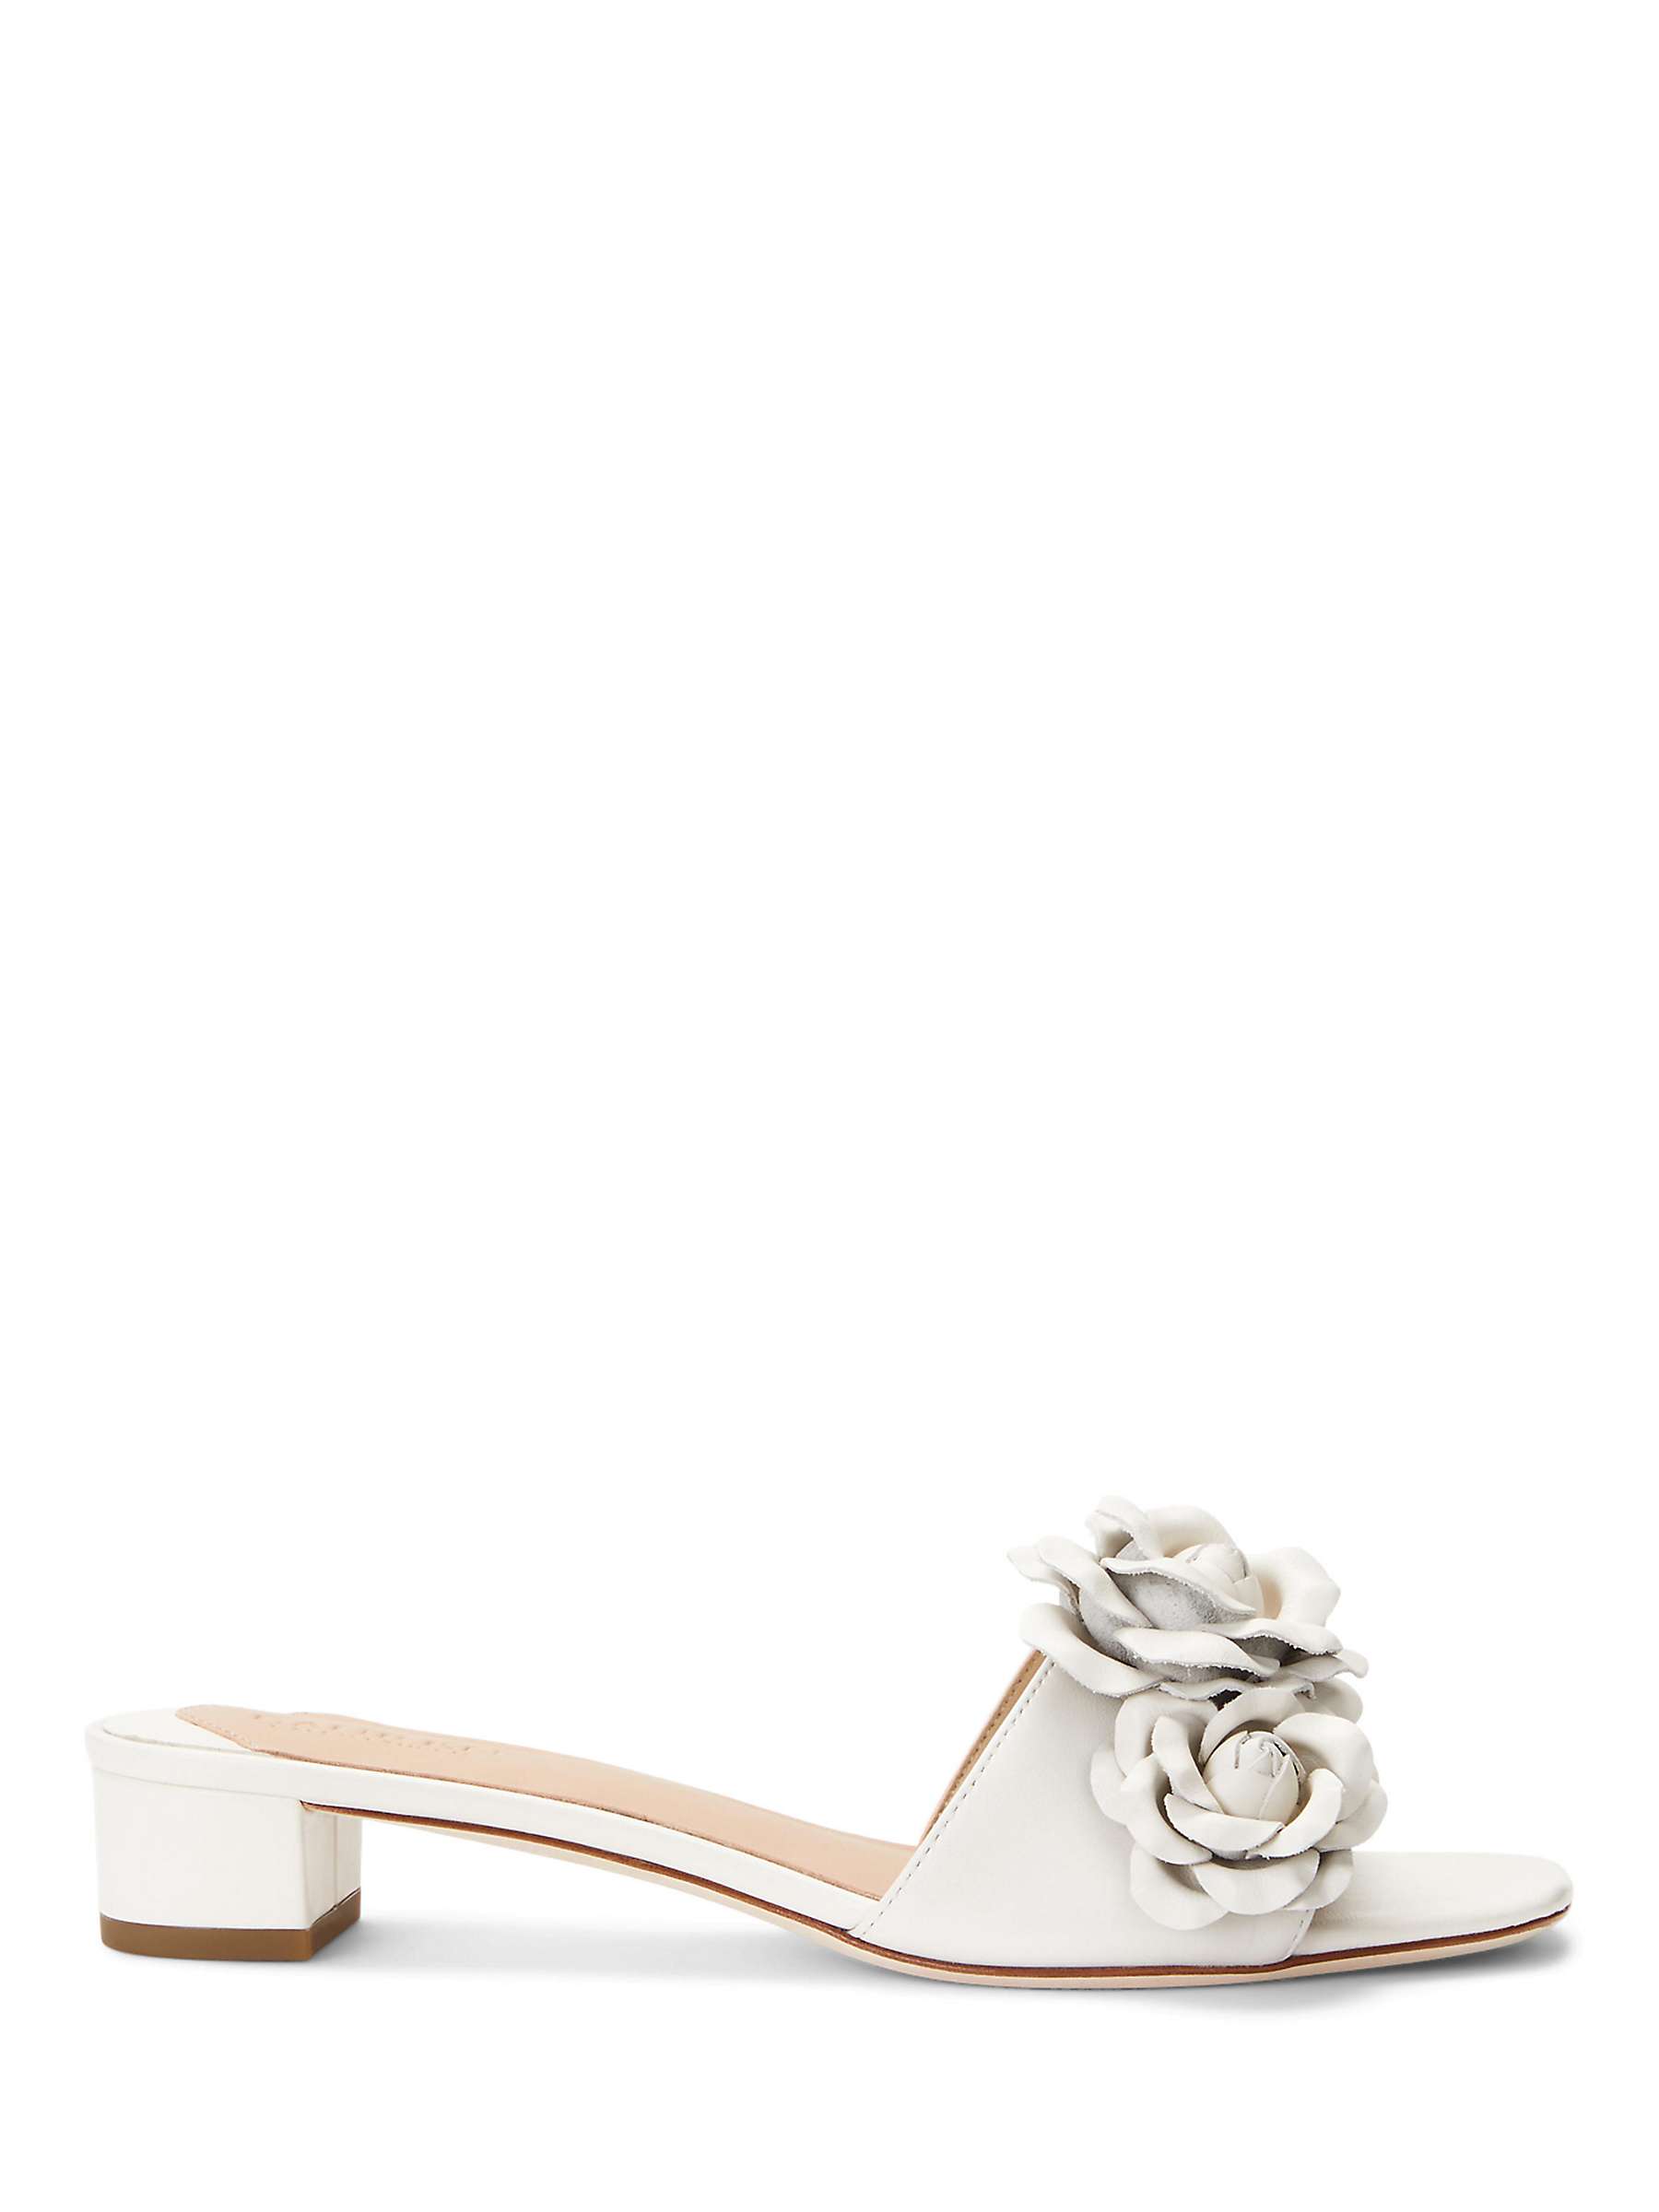 Buy Lauren Ralph Lauren Fay Flower Leather Sandals, White Online at johnlewis.com